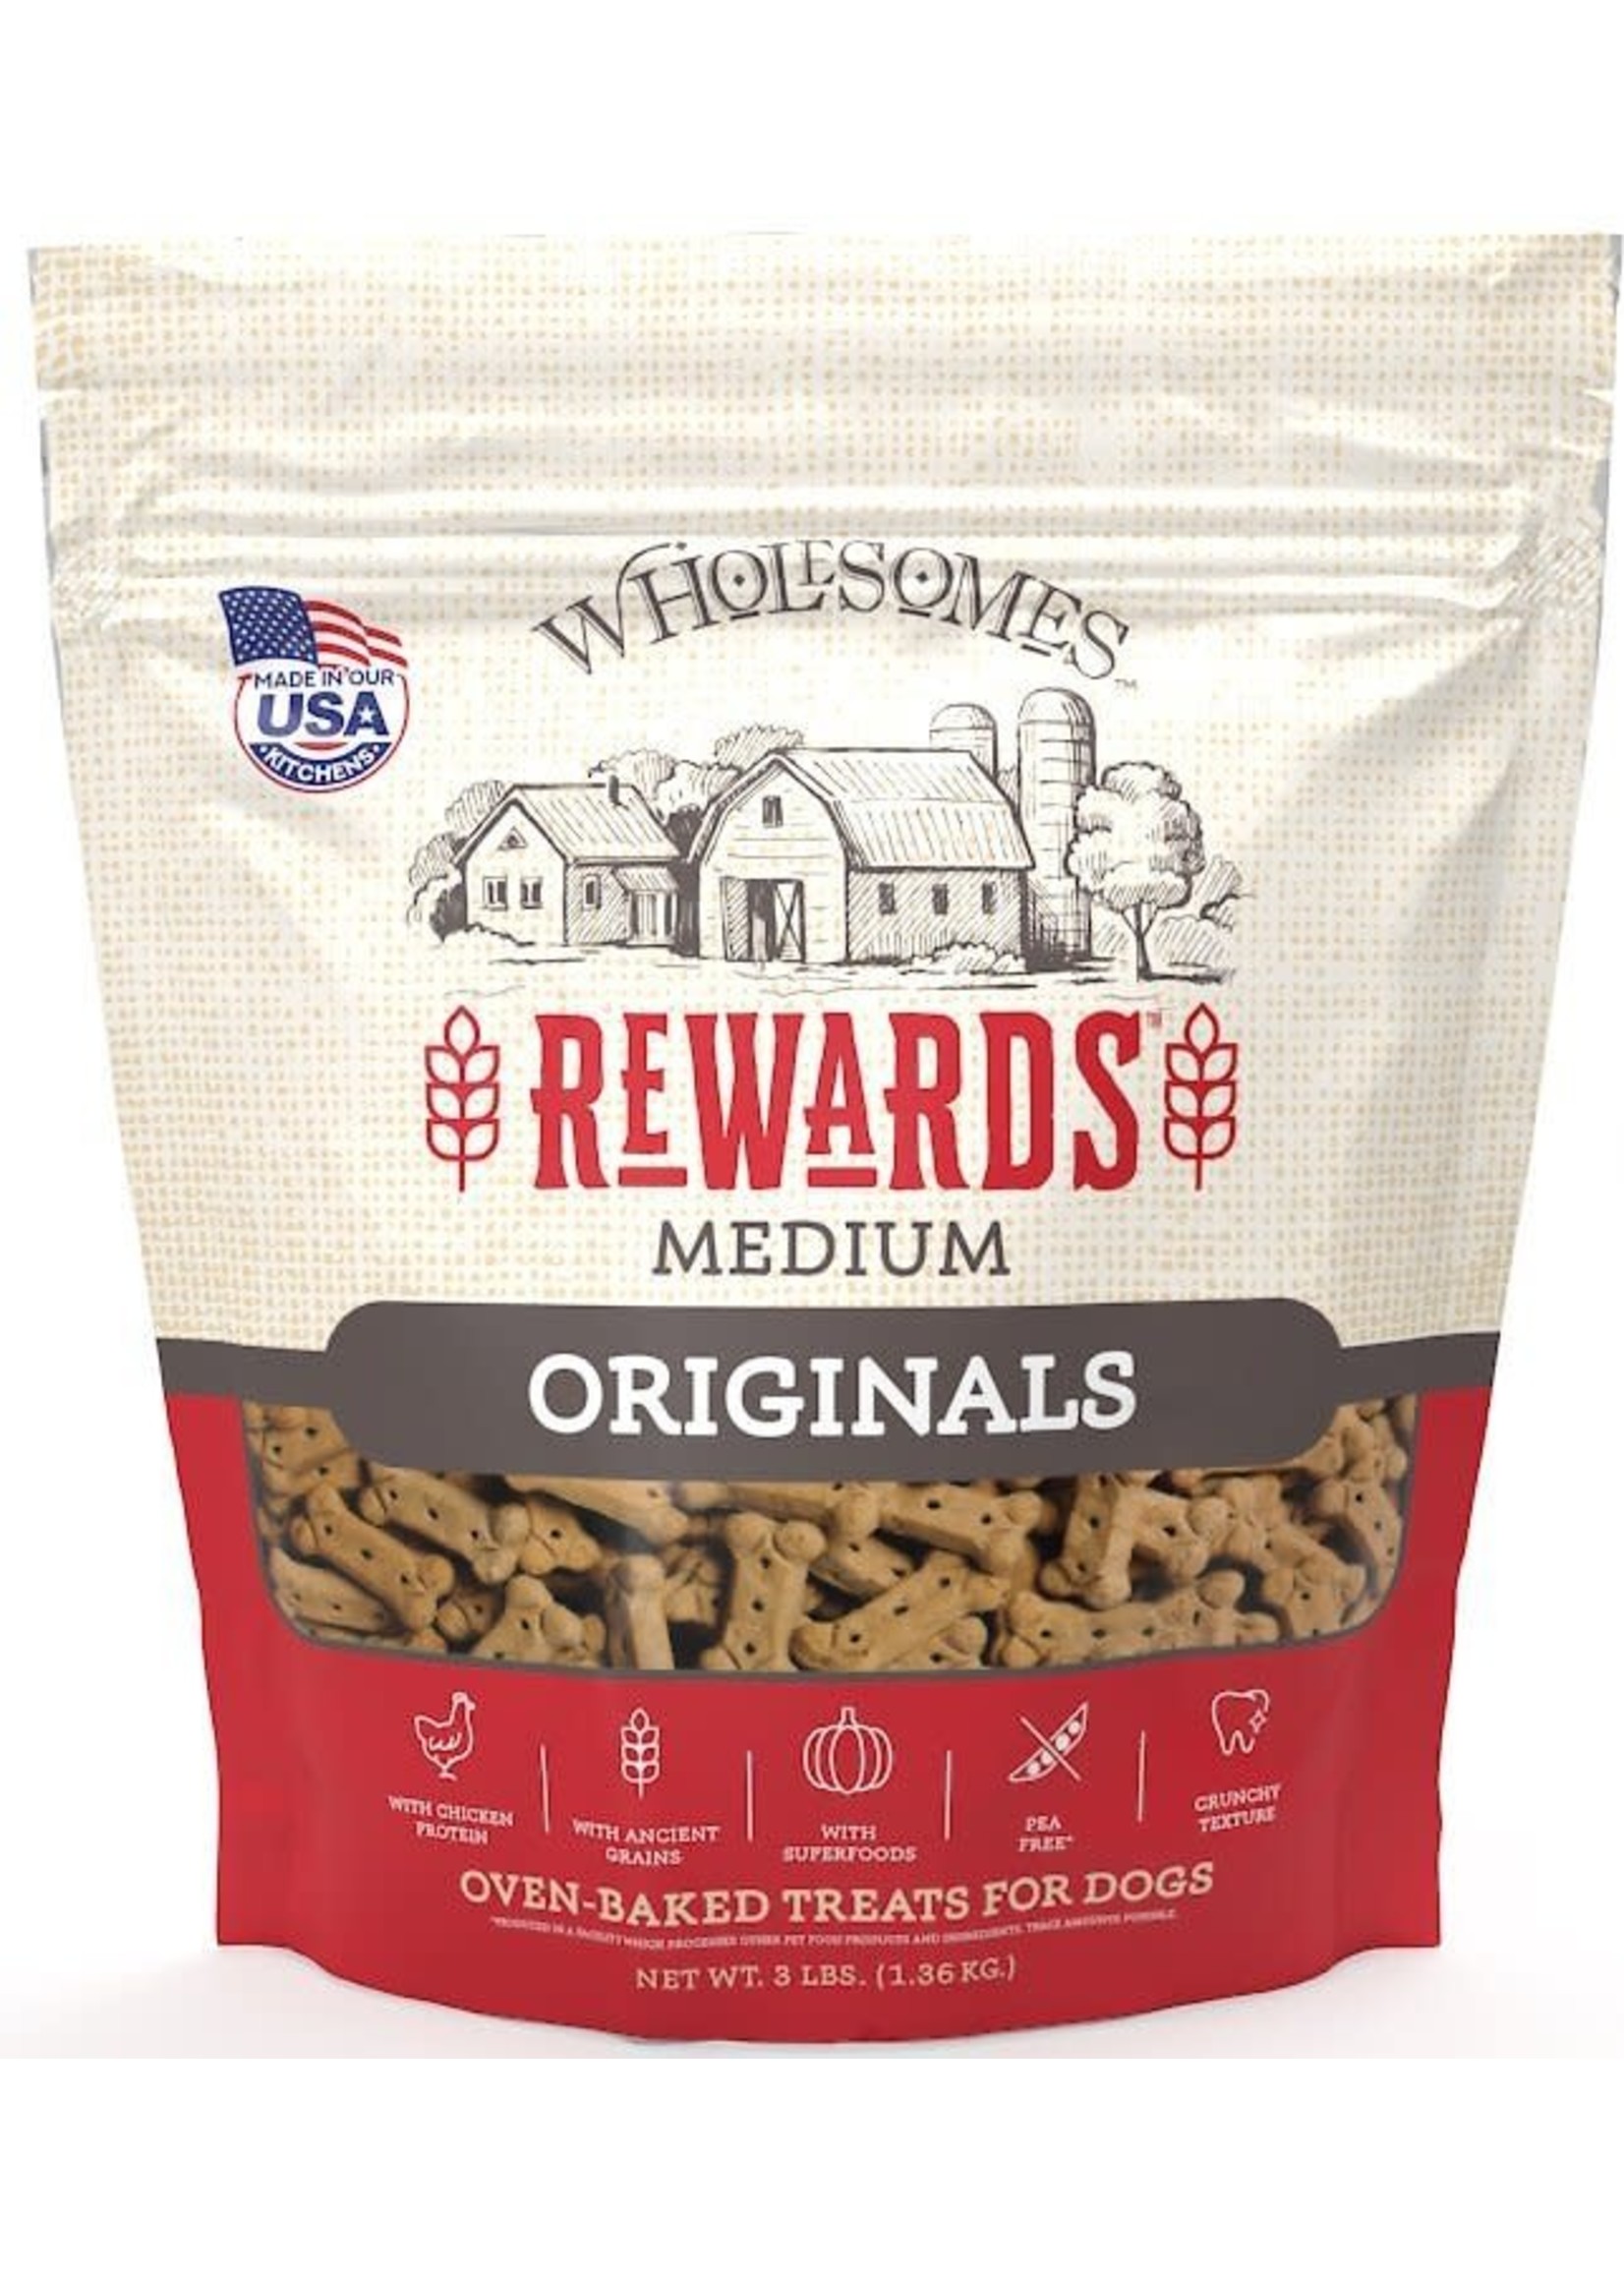 Wholesomes Rewards Medium Original Dog Biscuits 3lbs